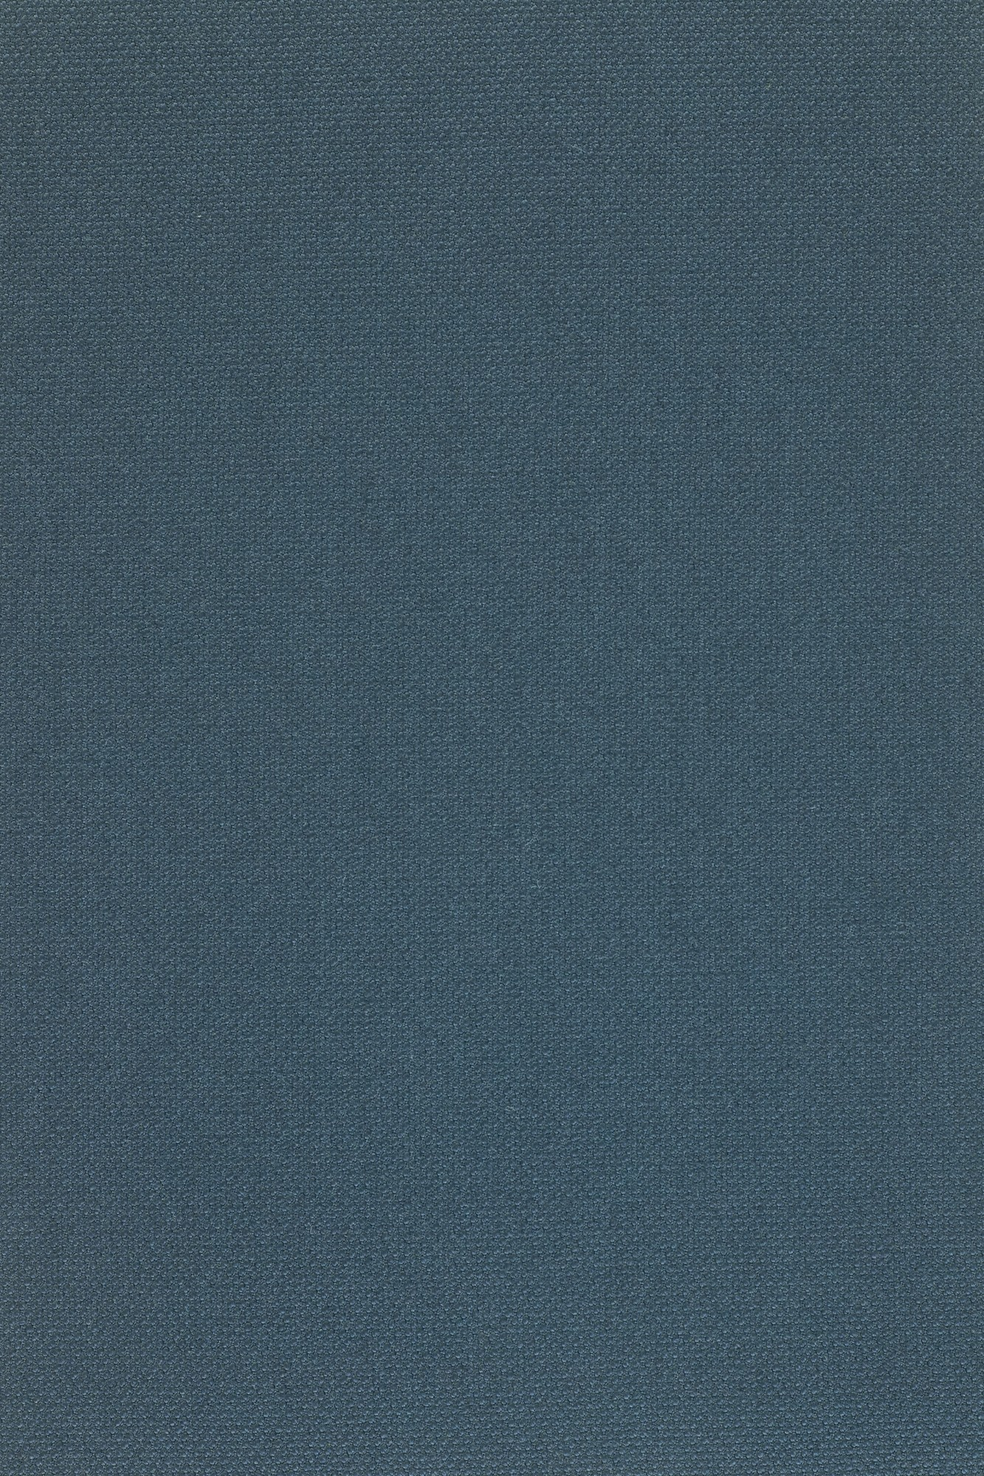 Fabric sample Steelcut 2 780 blue